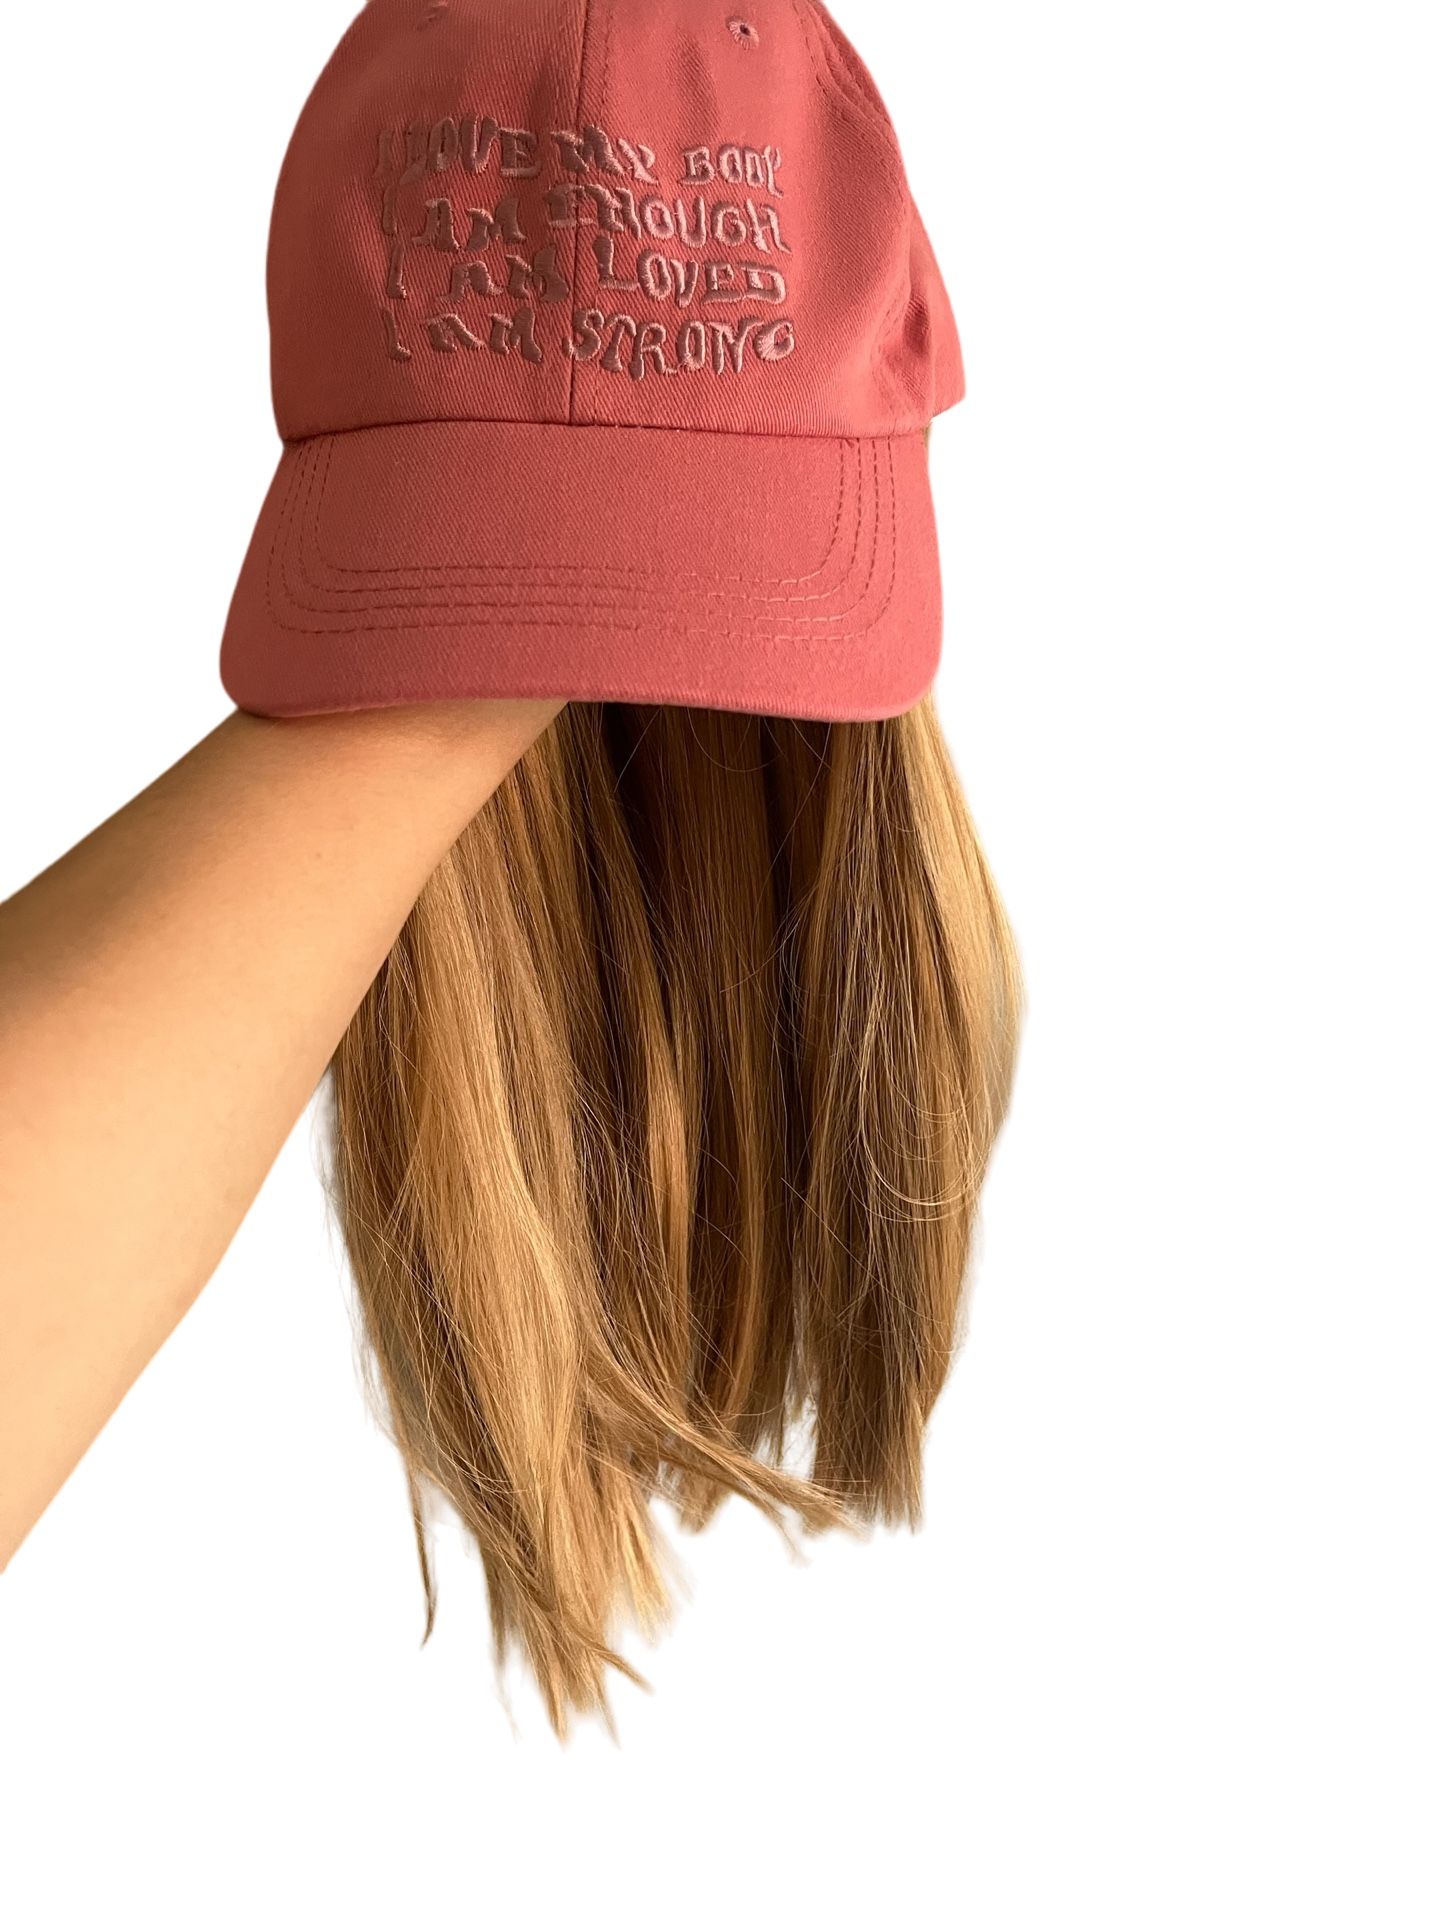 Pink baseball hat wig